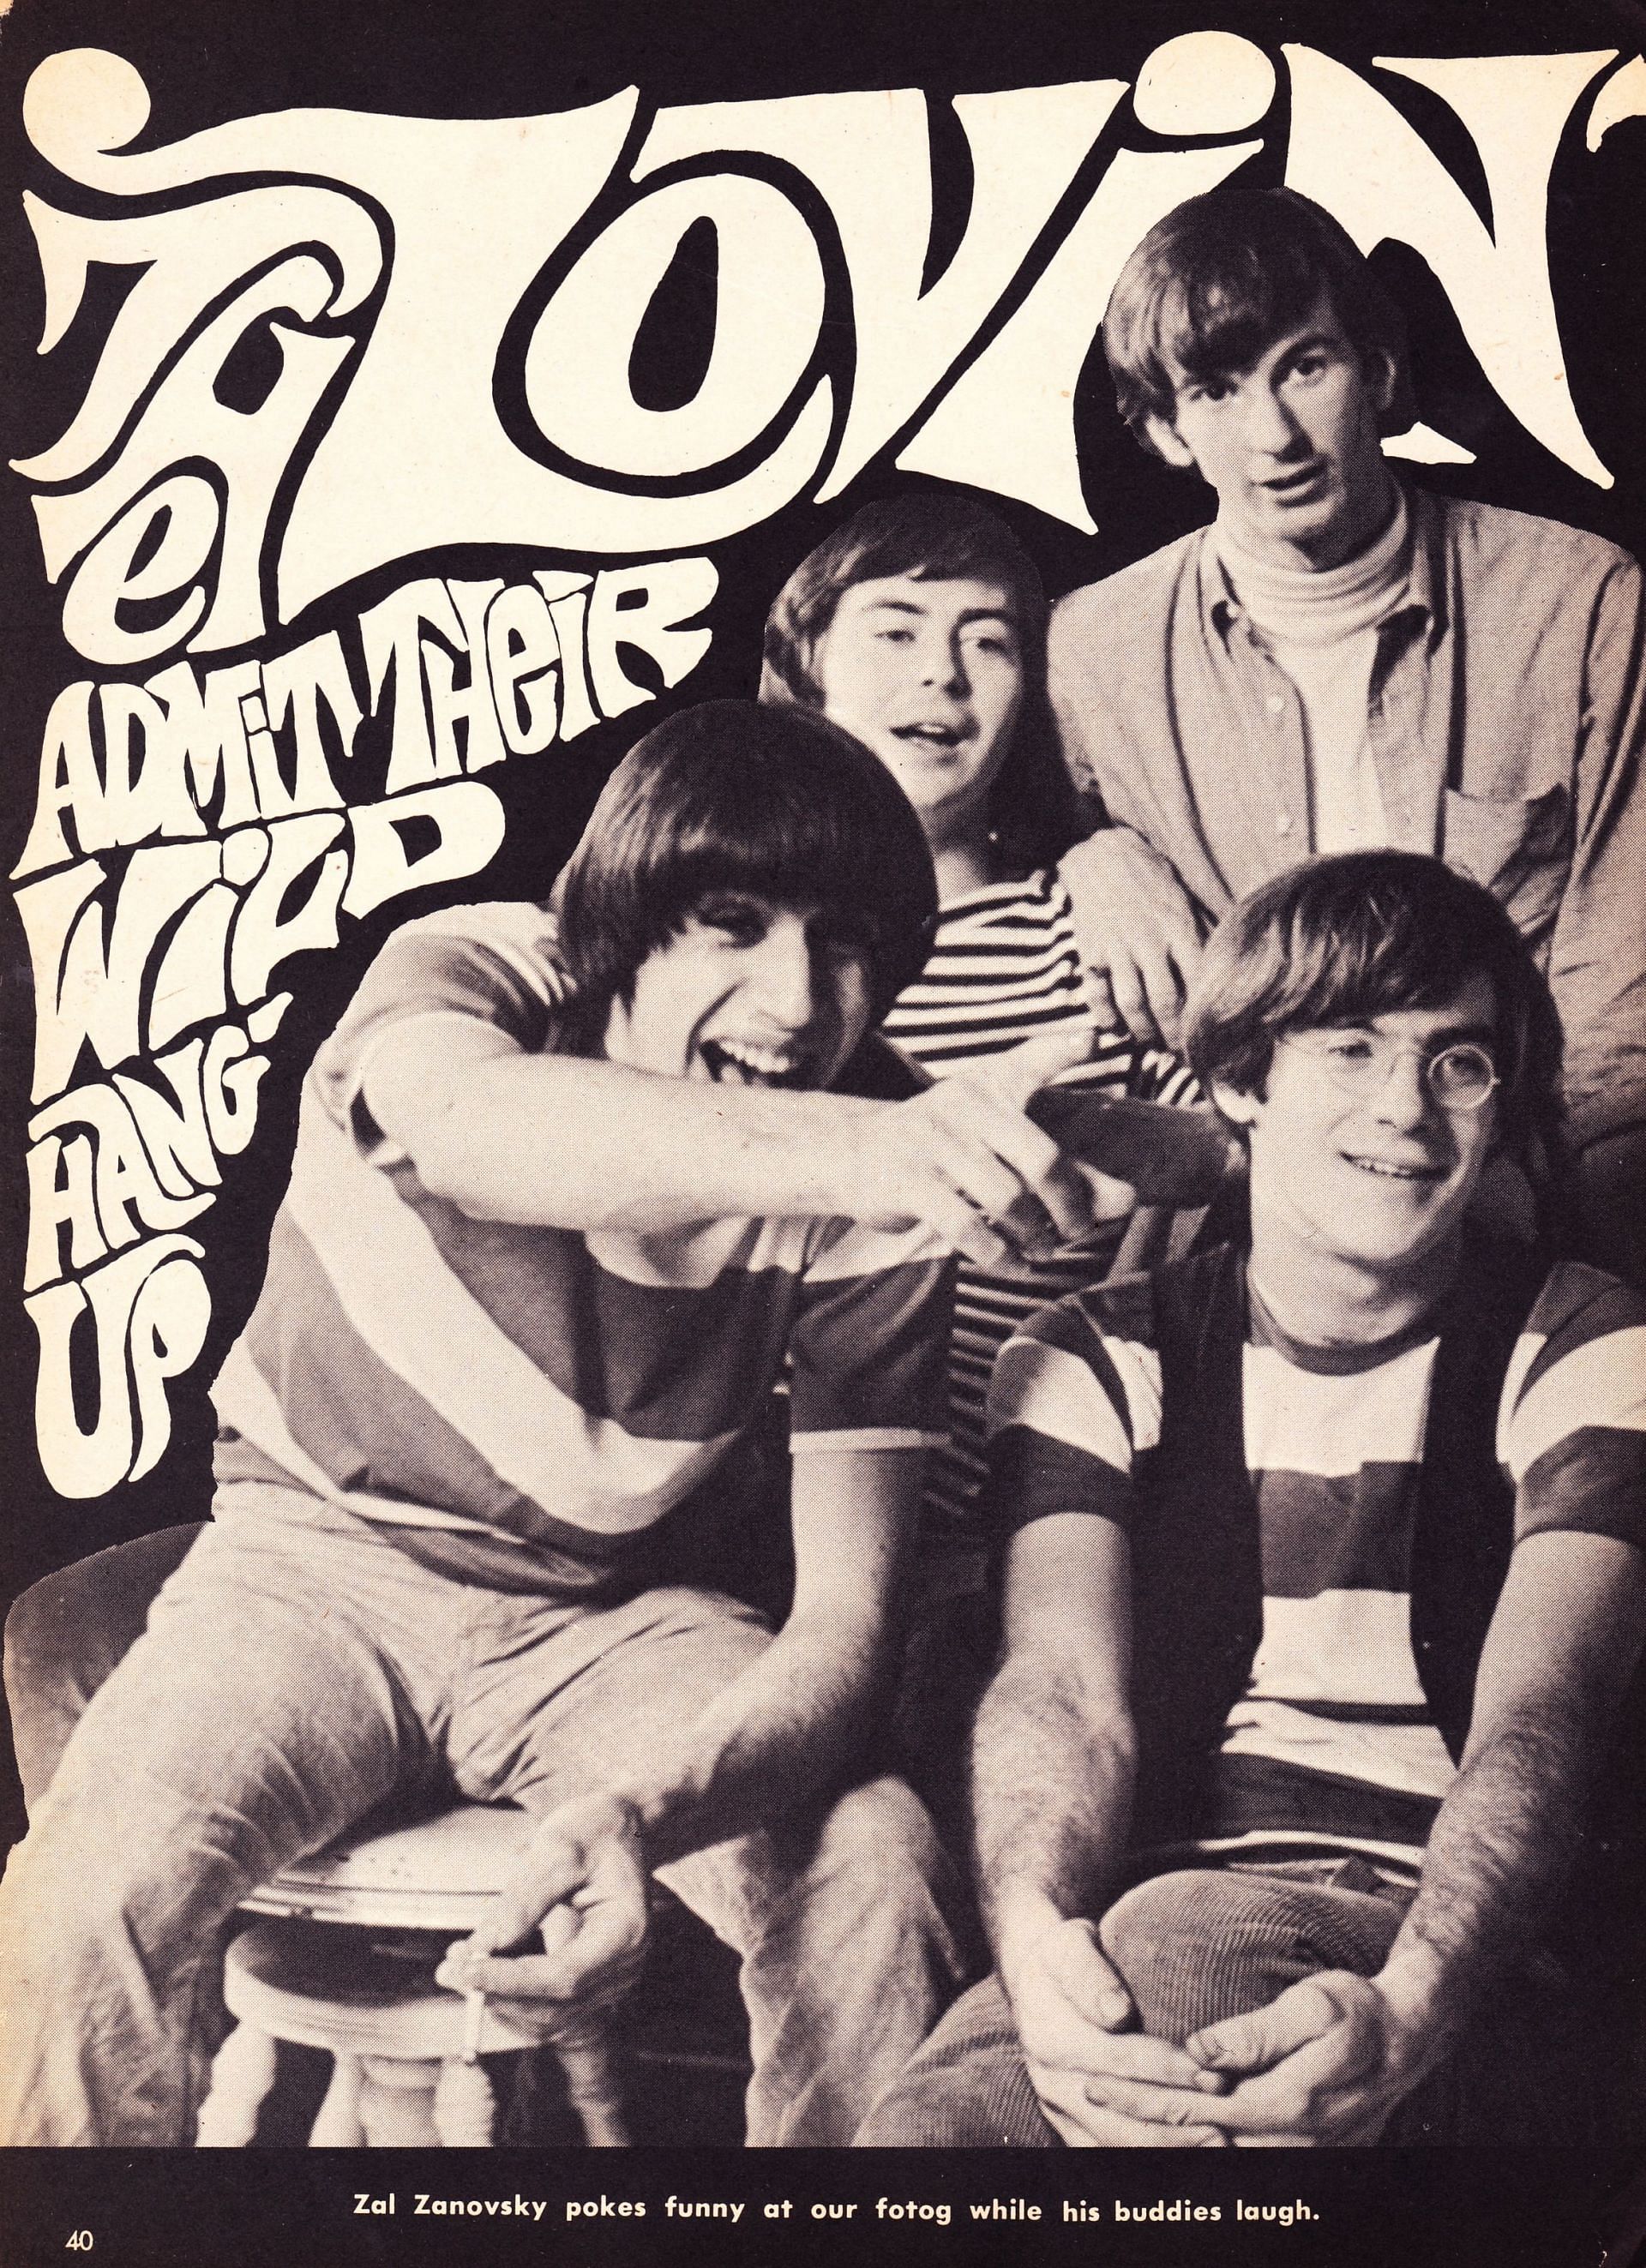 John Sebastian with his band, The Lovin&#039; Spoonful (Image via Freak Out, U.S.A. 1967)